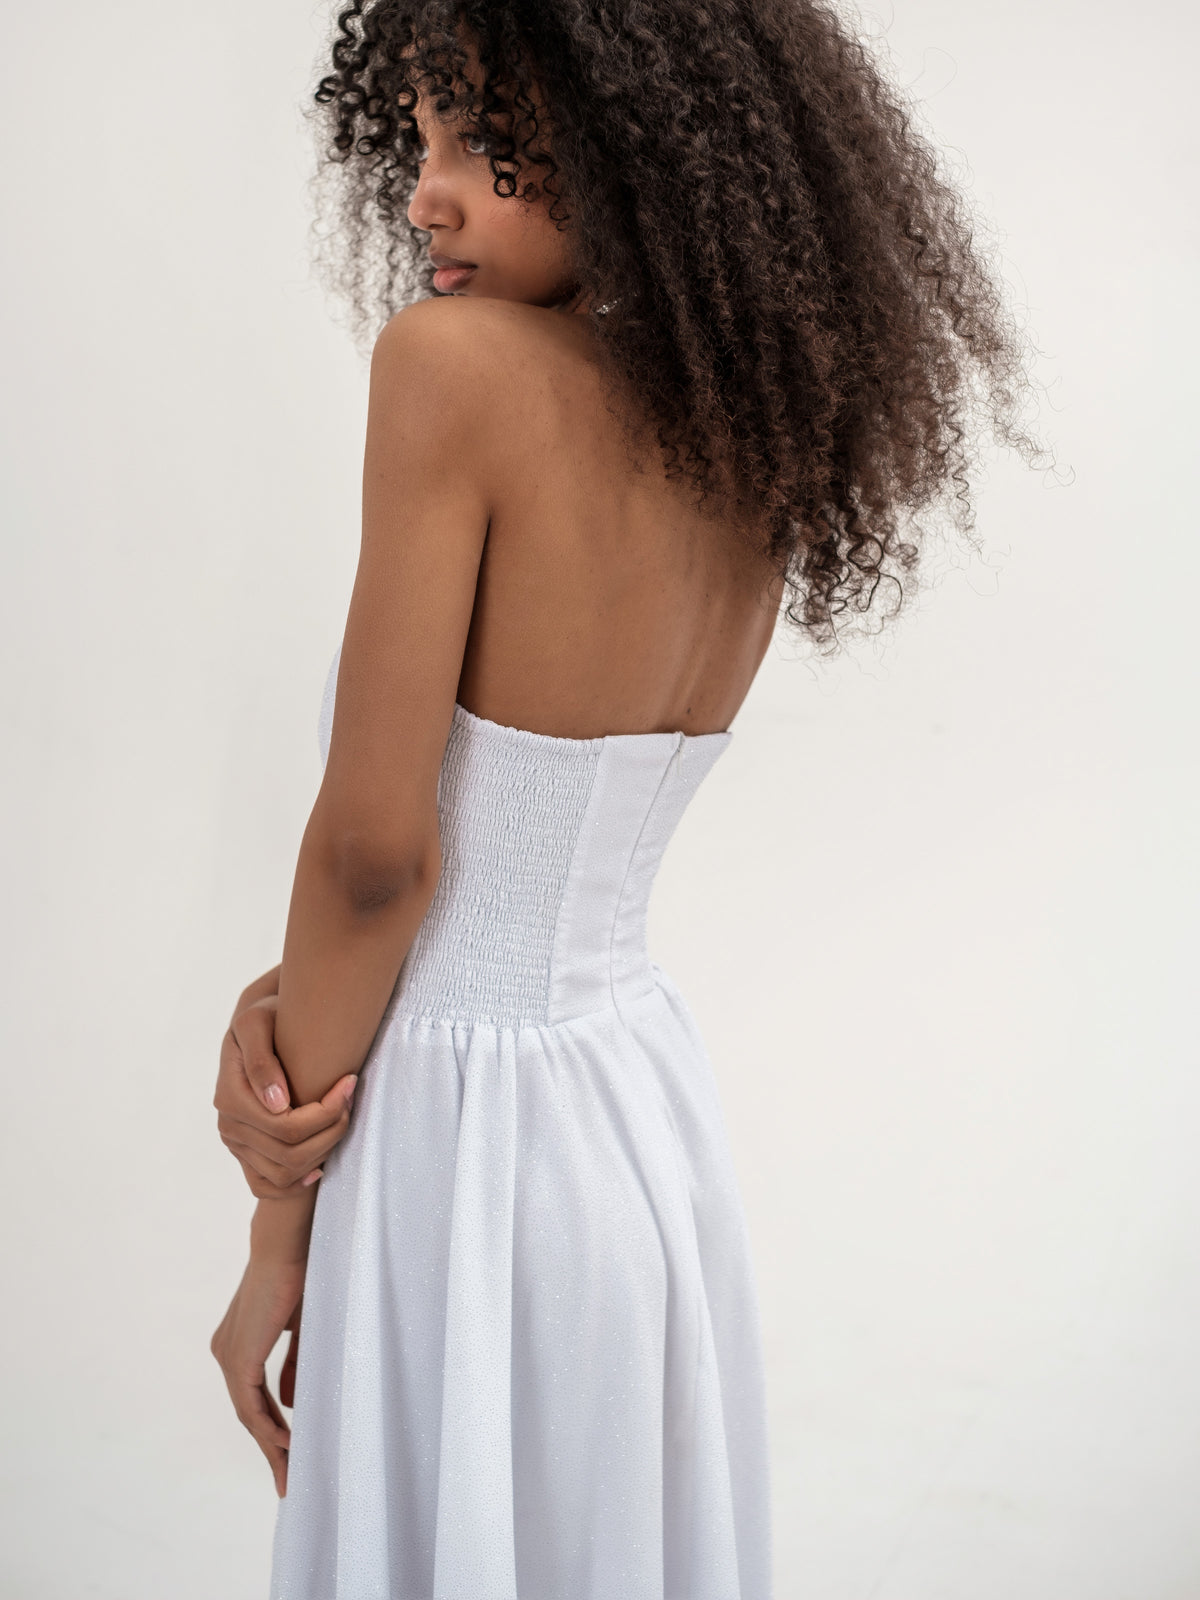 White short corset dress with glitter